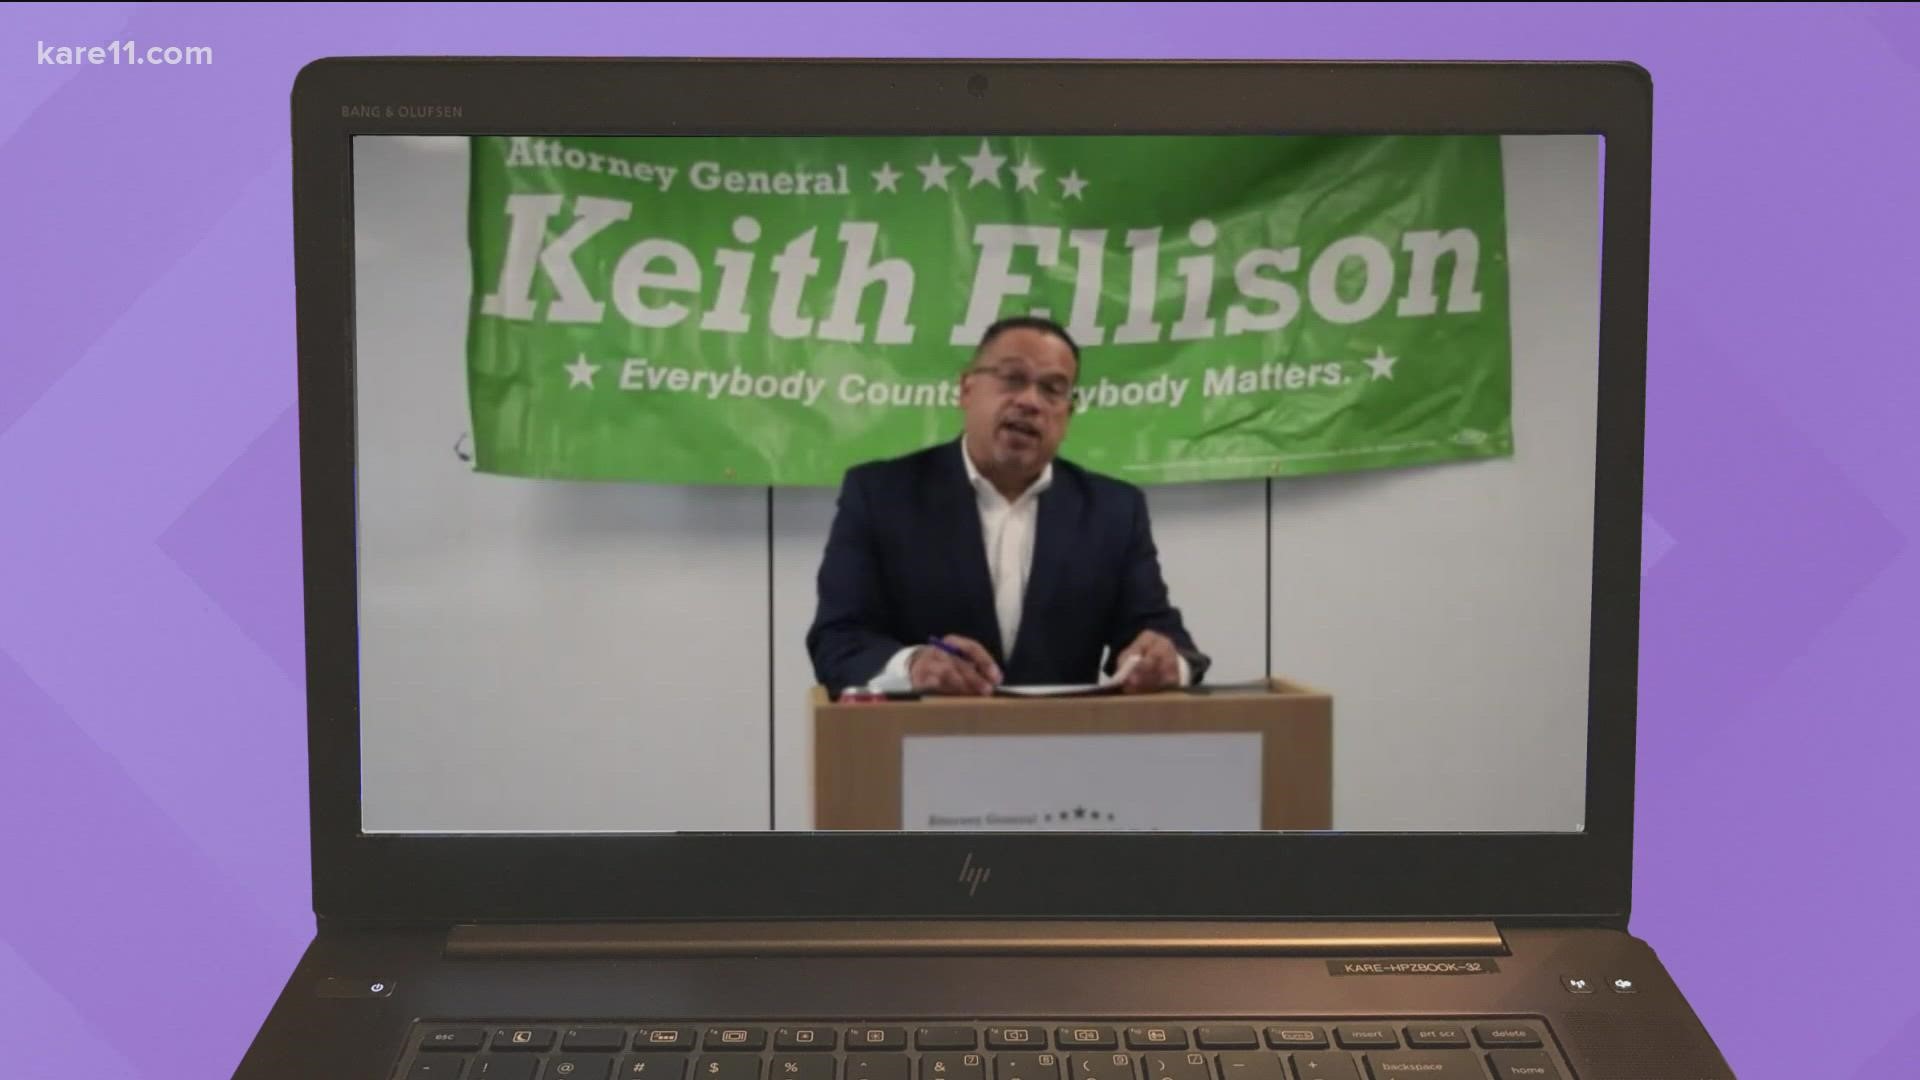 The Minnesota DFL confirmed Sen. Amy Klobuchar and St. Paul Mayor Melvin Carter are endorsing Keith Ellison's bid for reelection.